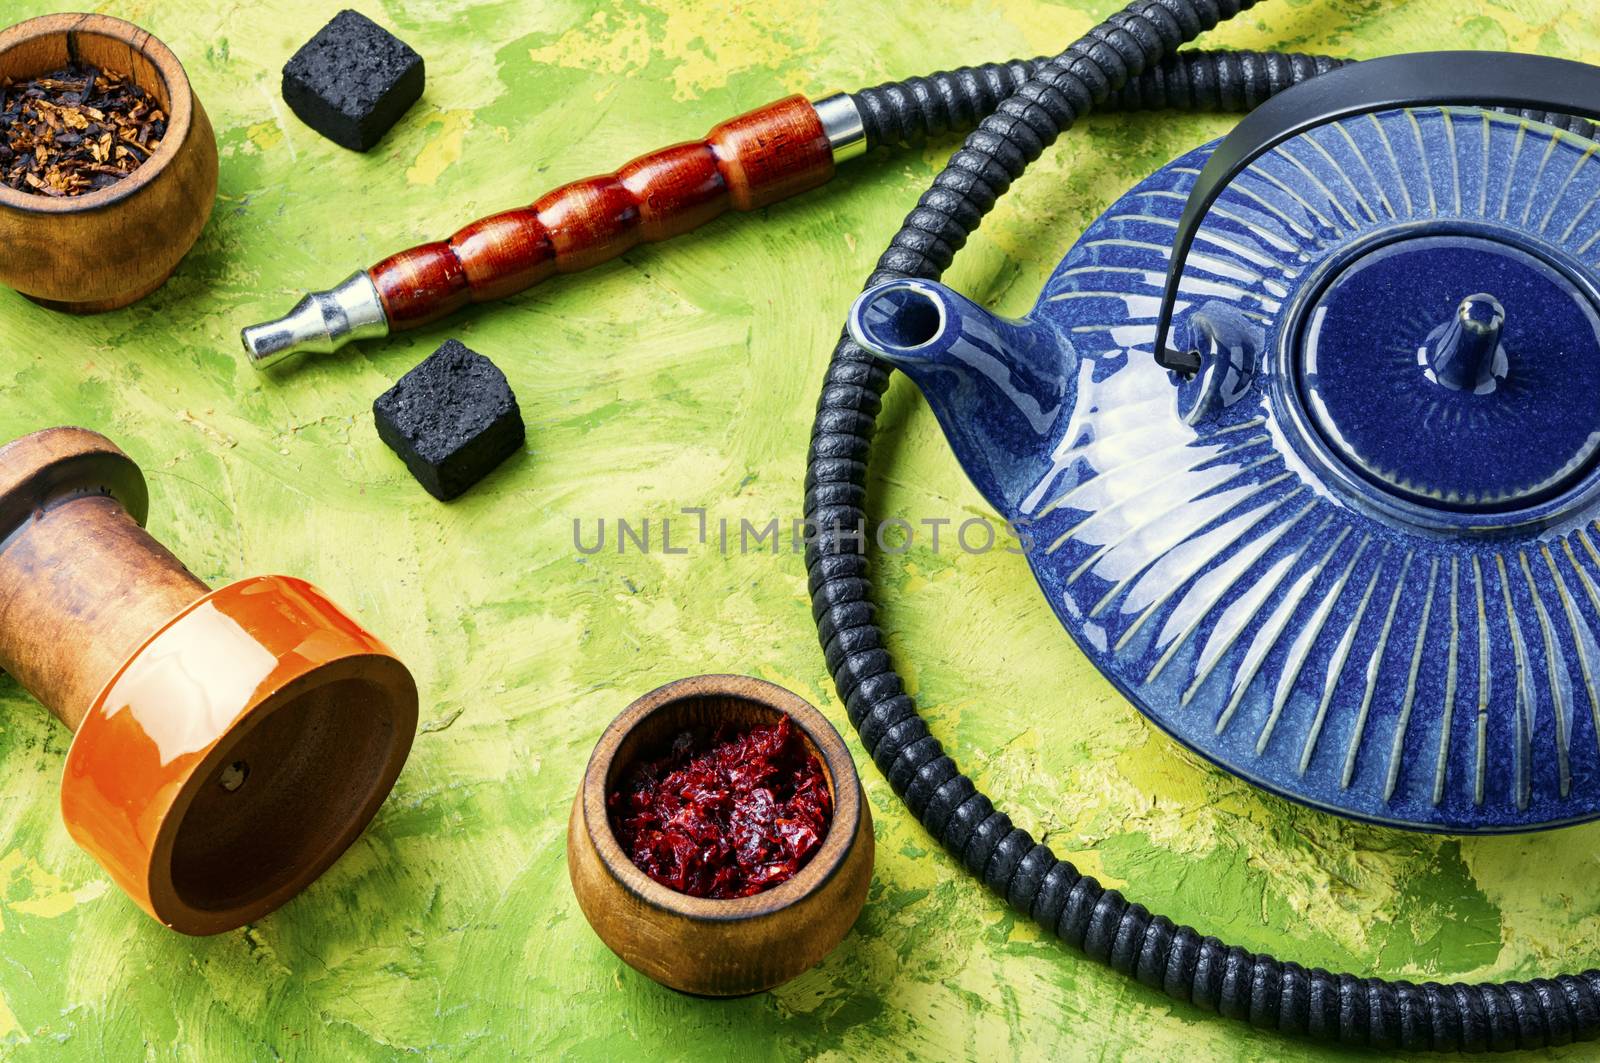 Details of tobacco hookah and teapot with tea.Egyptian smoking shisha and teakettle